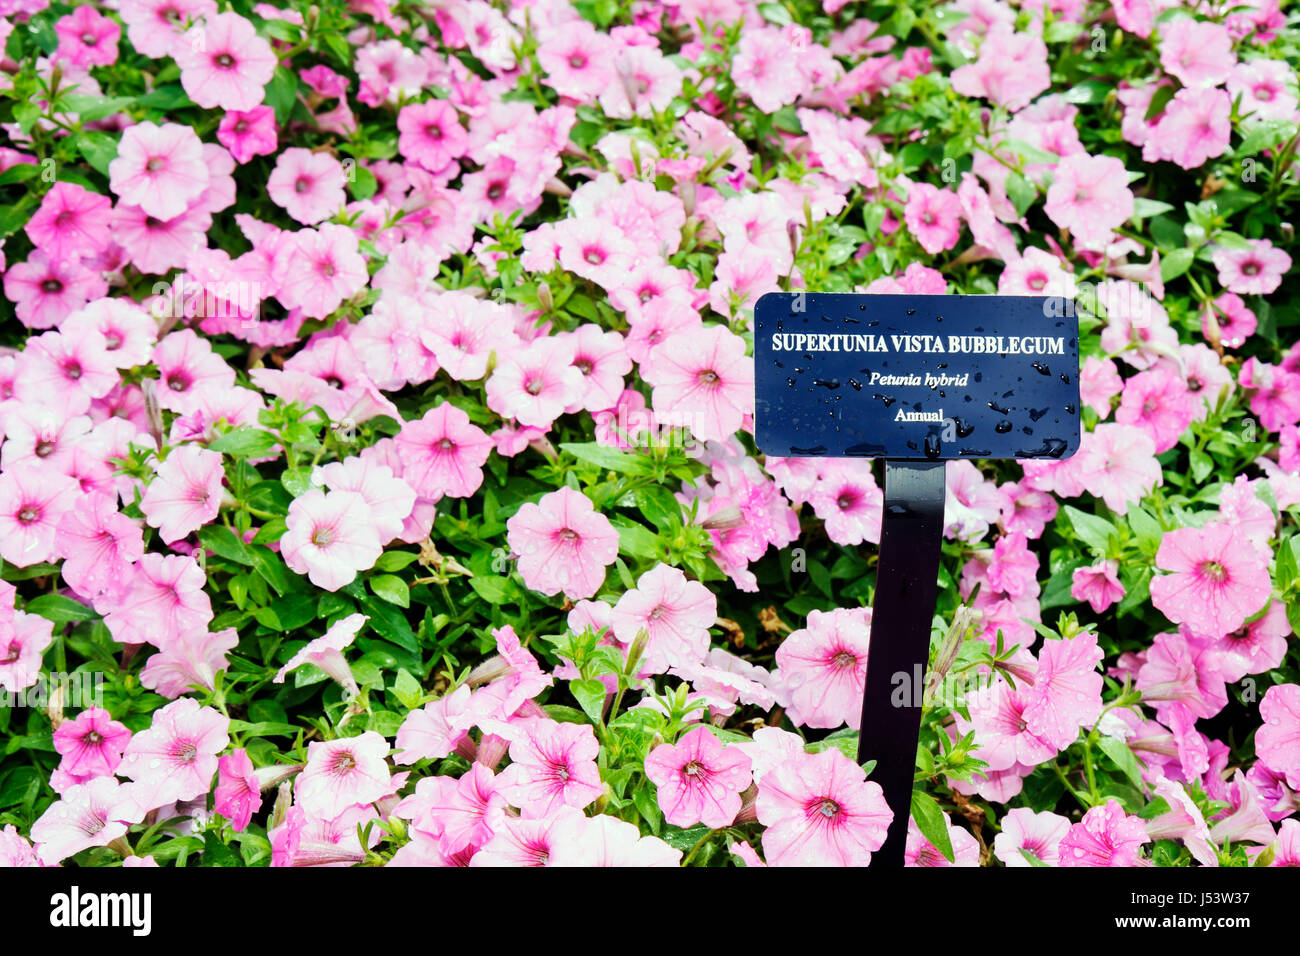 Arkansas Hot Springs,Garvan Woodland Gardens,Supertunia Vista Bubblegum,Petunia hybrid,violet color,annual,nature,botany,flora,planting,flower bed,blo Stock Photo